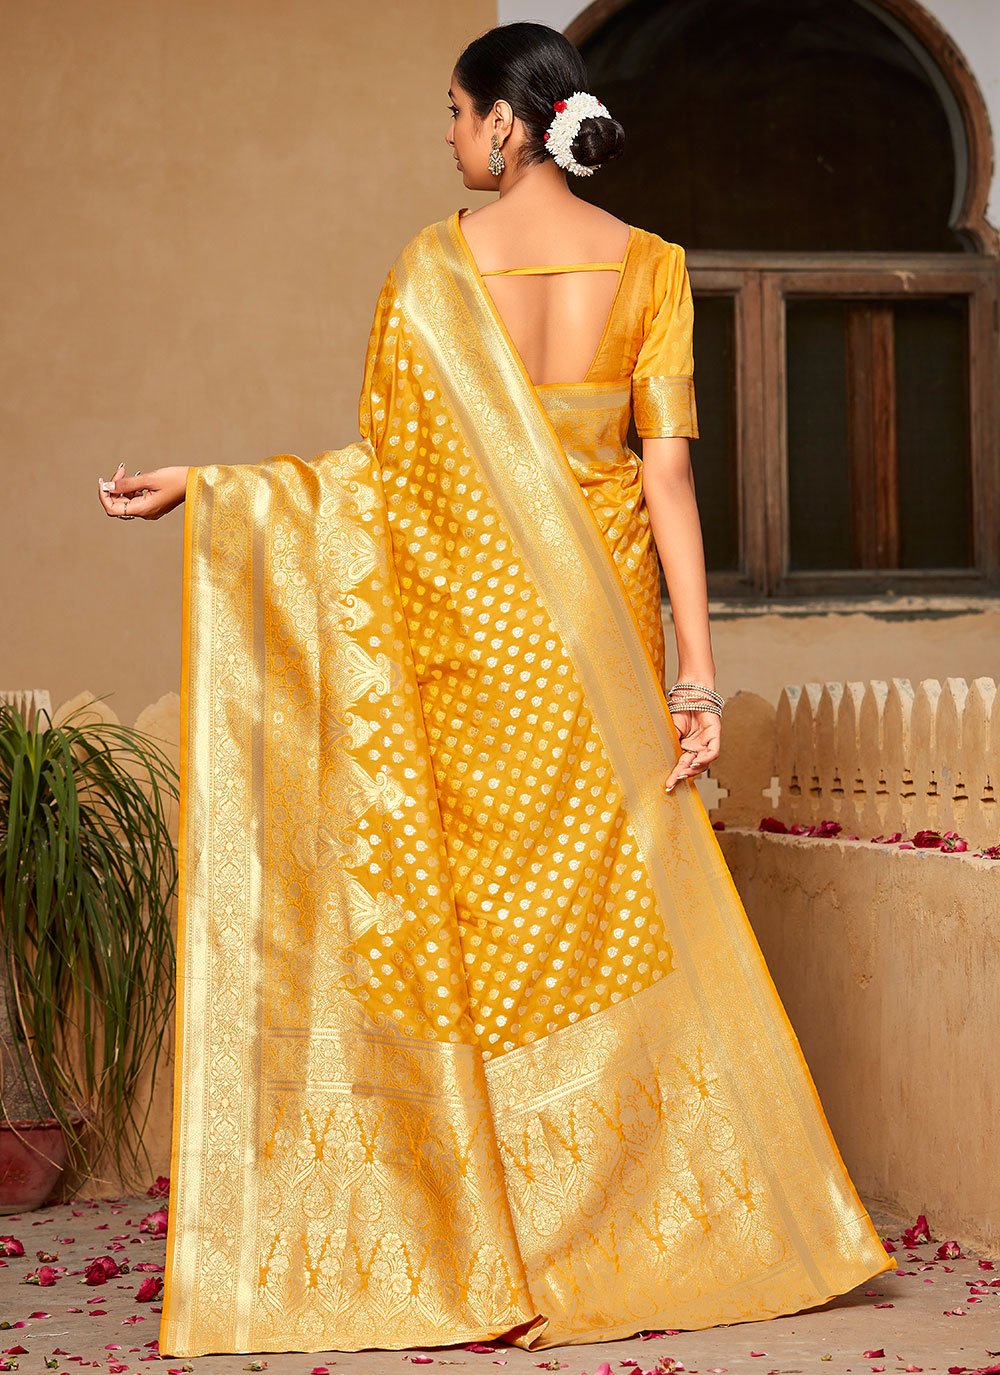 Portrait Beautiful Bengali Bride Yellow Saree Gold Jewelry Stock Photo by  ©aarnabdas01@gmail.com 563714466